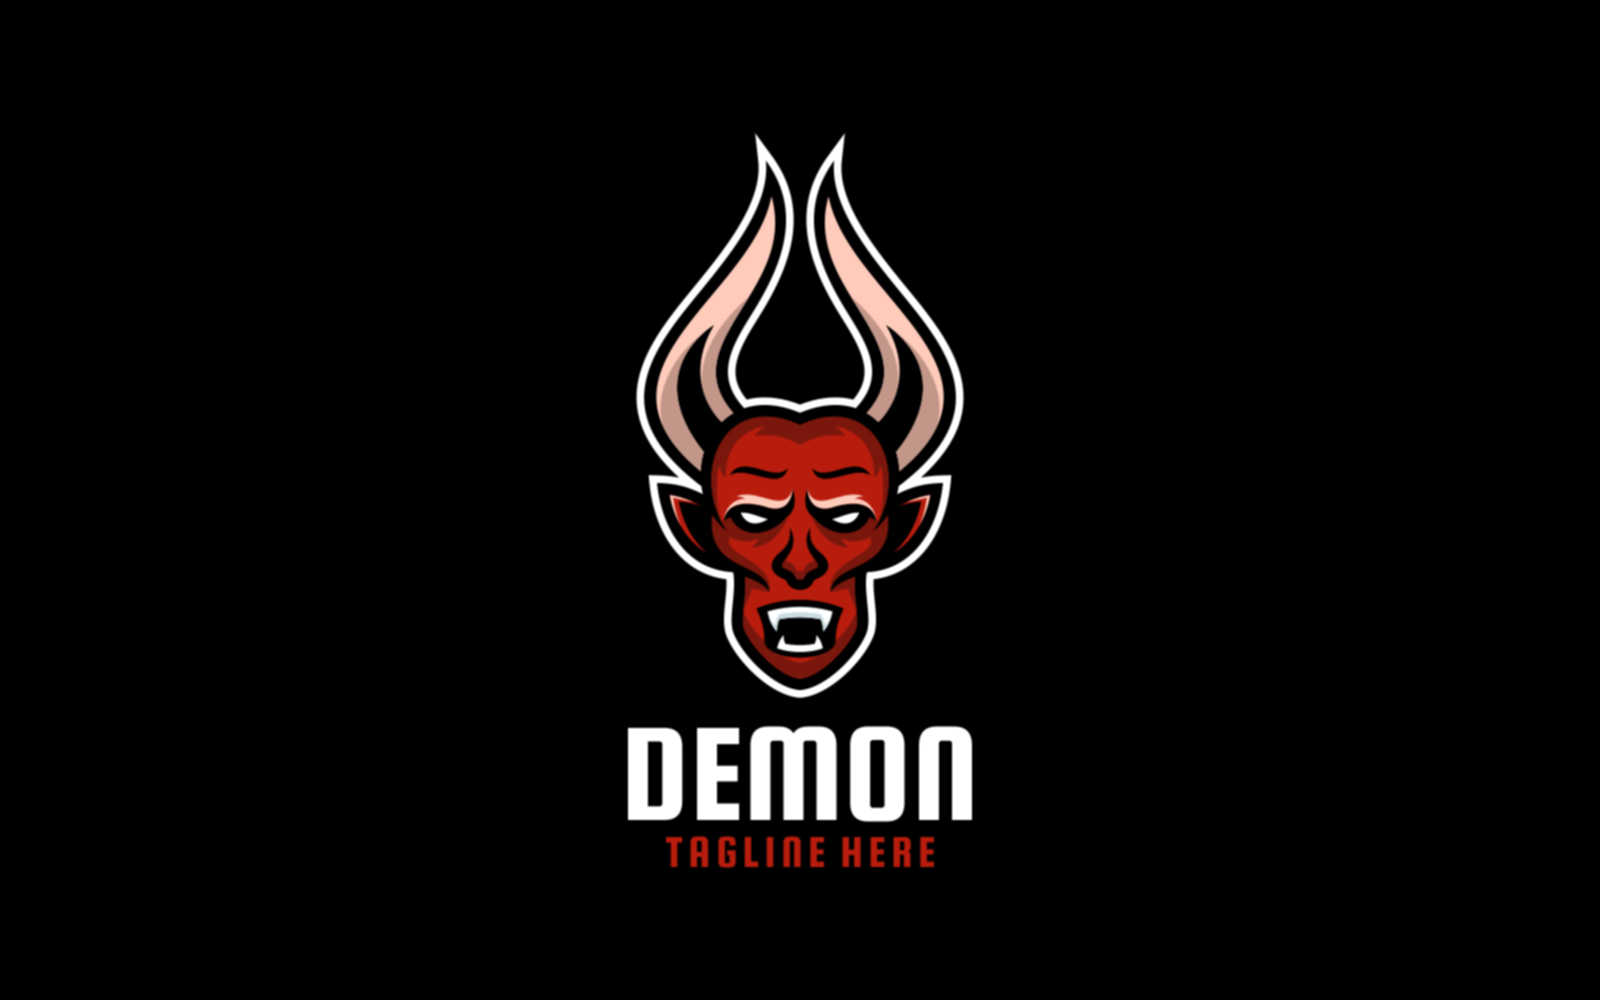 Demon Simple Mascot Logo Template